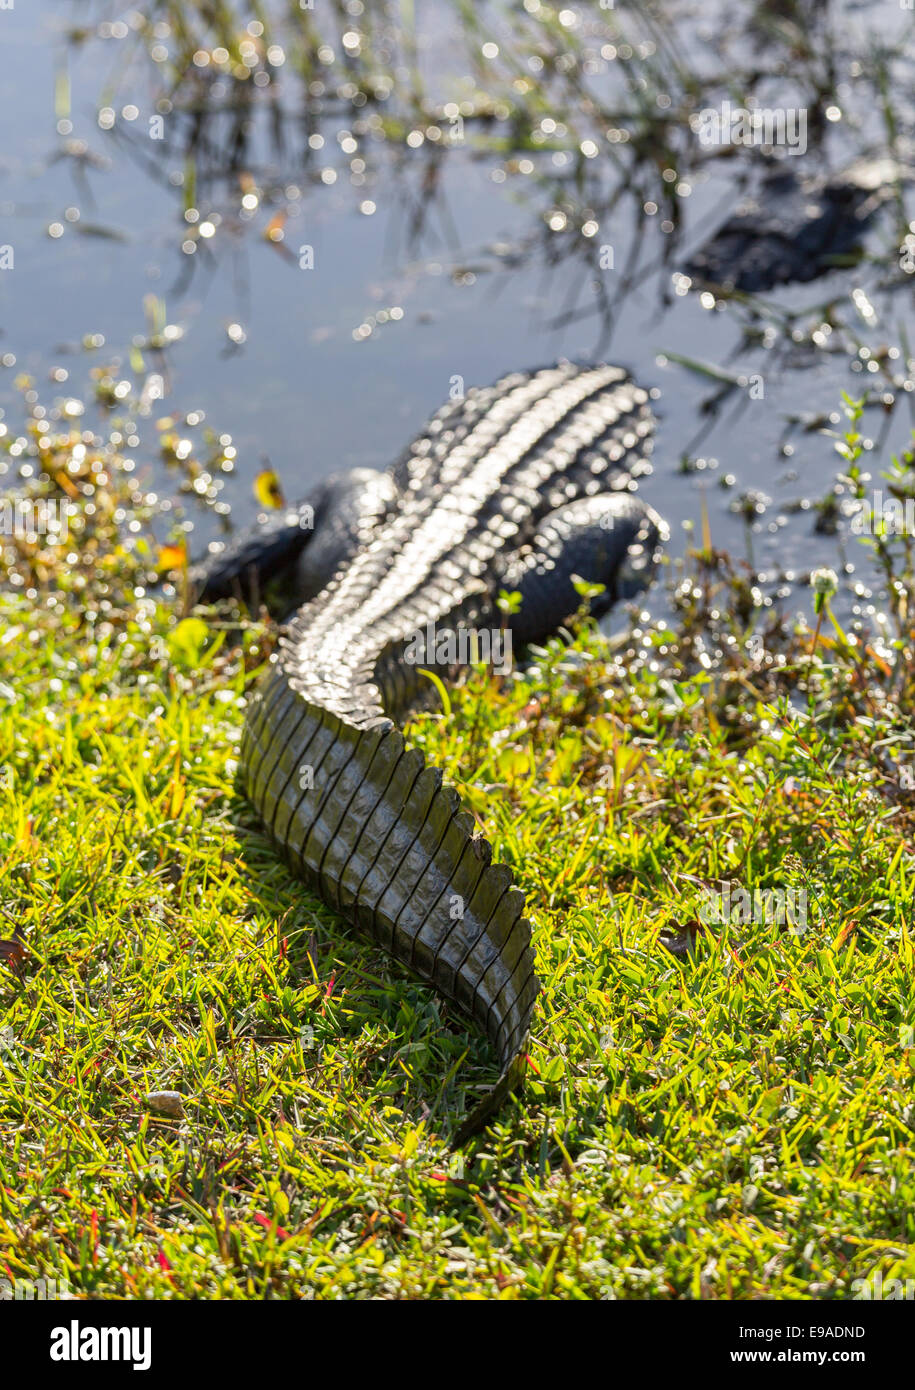 Close up of alligator in Everglades Stock Photo